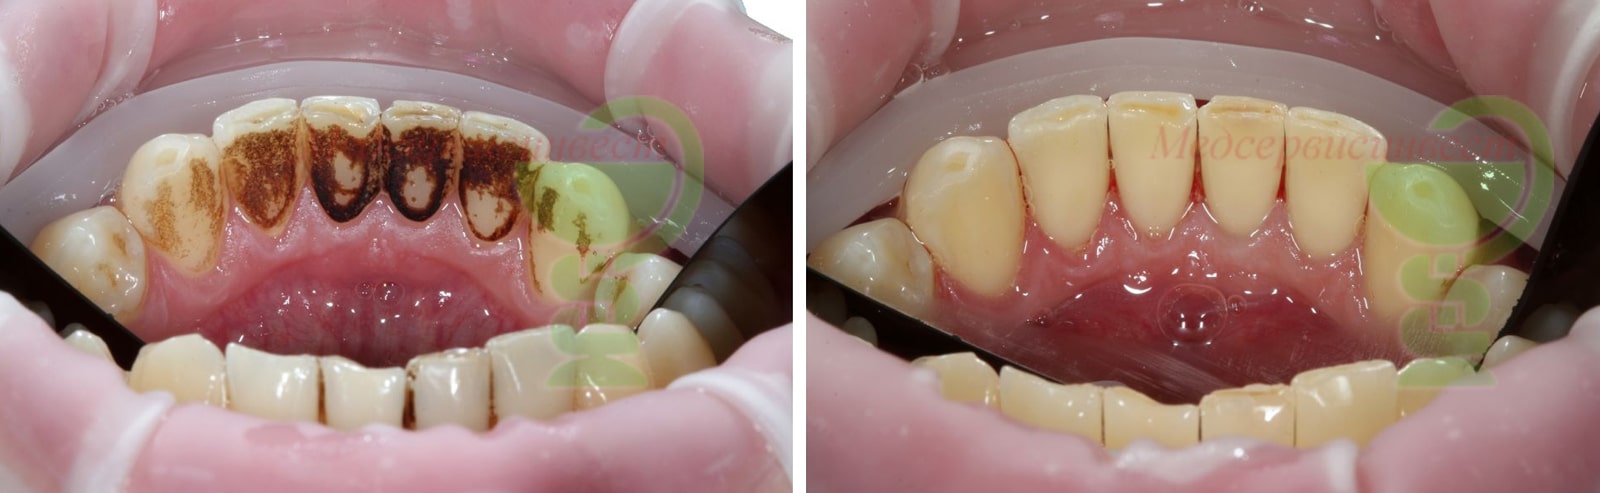 Профгигиена полости рта: десен и зубов - фото до и после